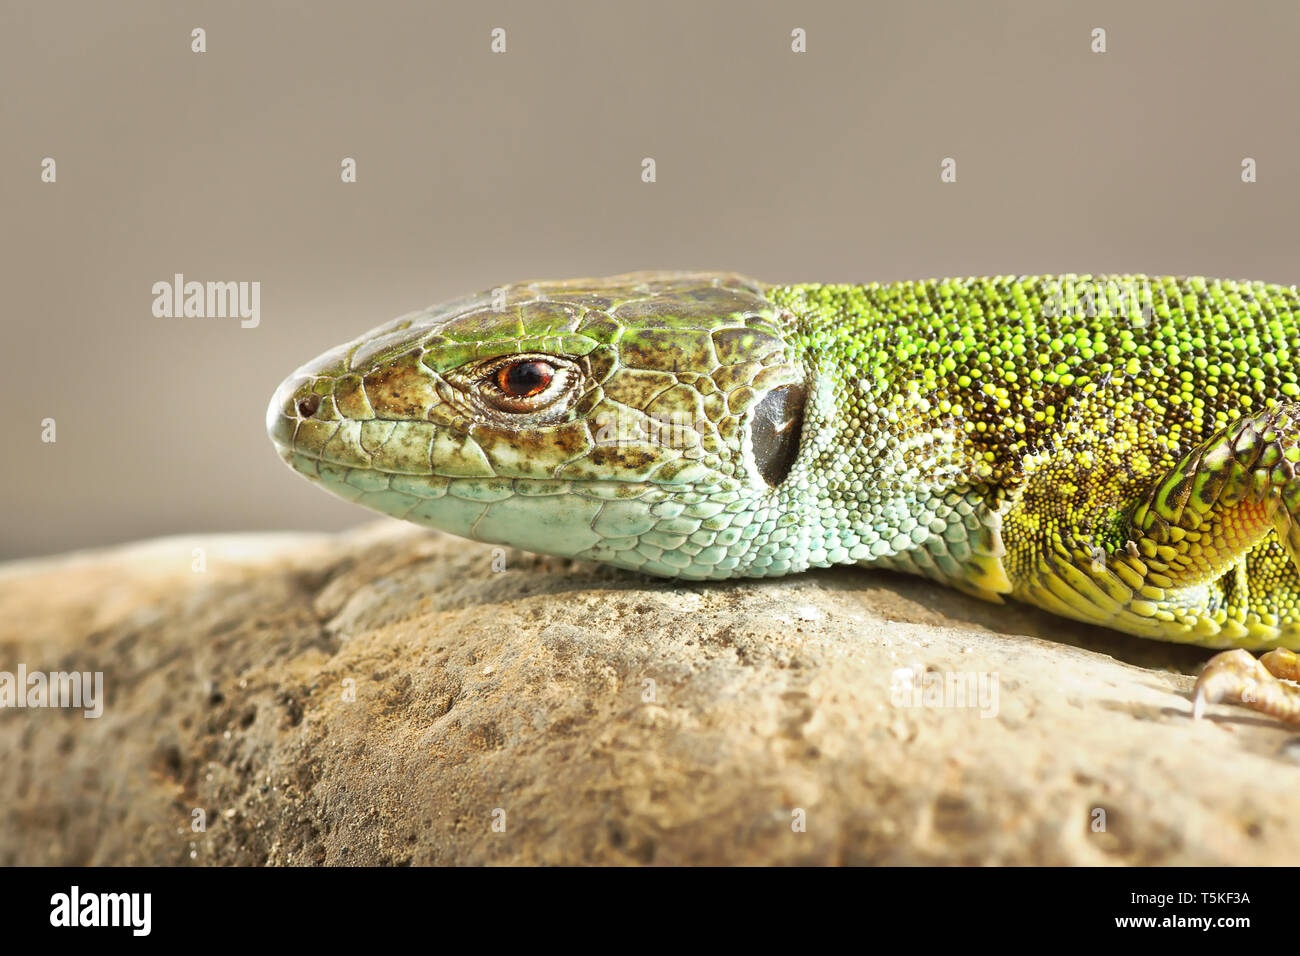 detailed image of Lacerta viridis, the common green lizard Stock Photo